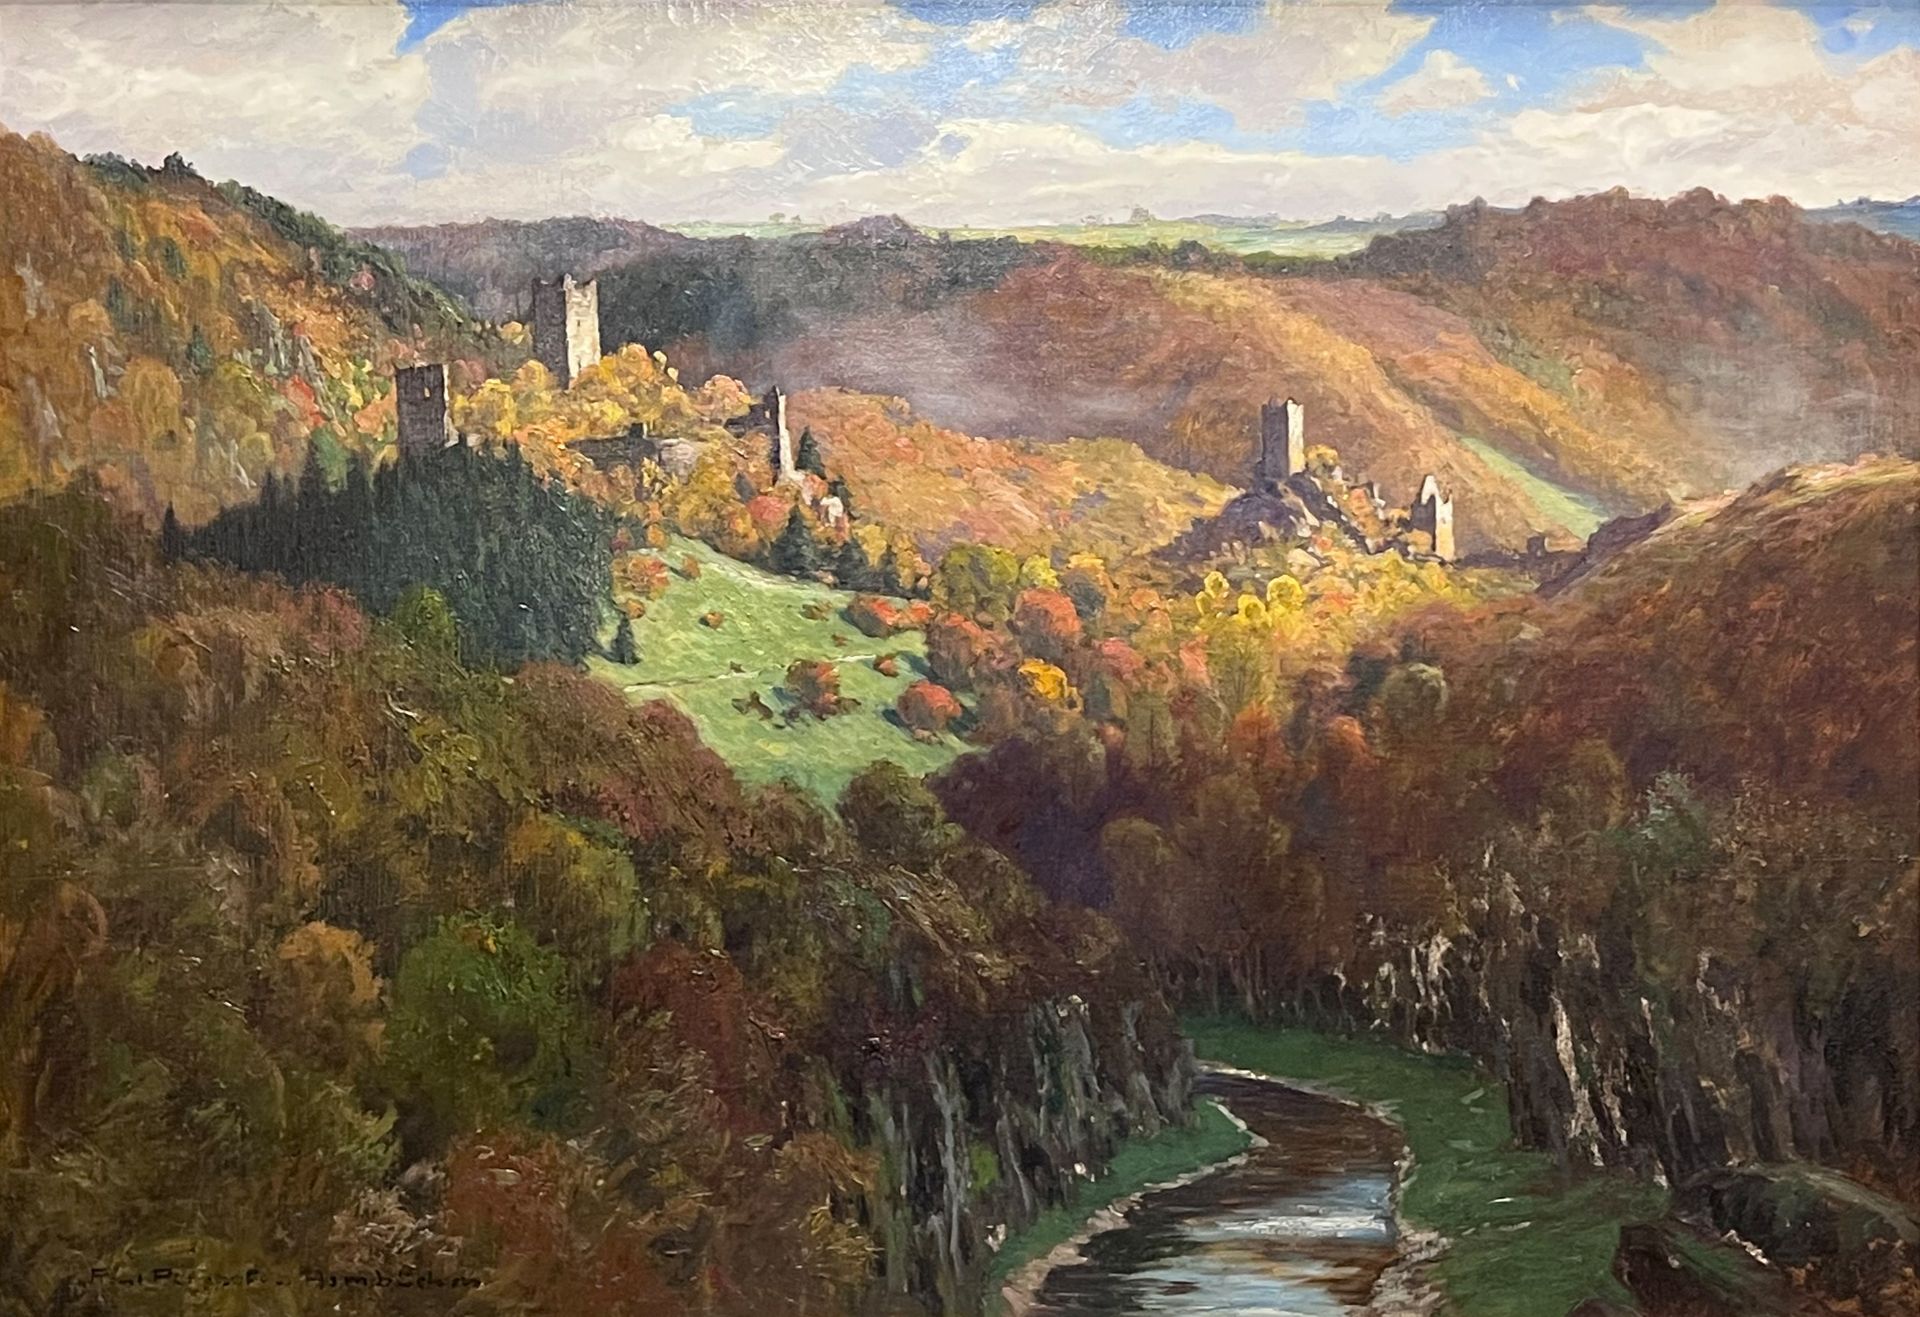 Paul PÜTZHOFEN-HAMBÜCHEN (1879 - 1939). View of the Manderscheid castles in the Eifel